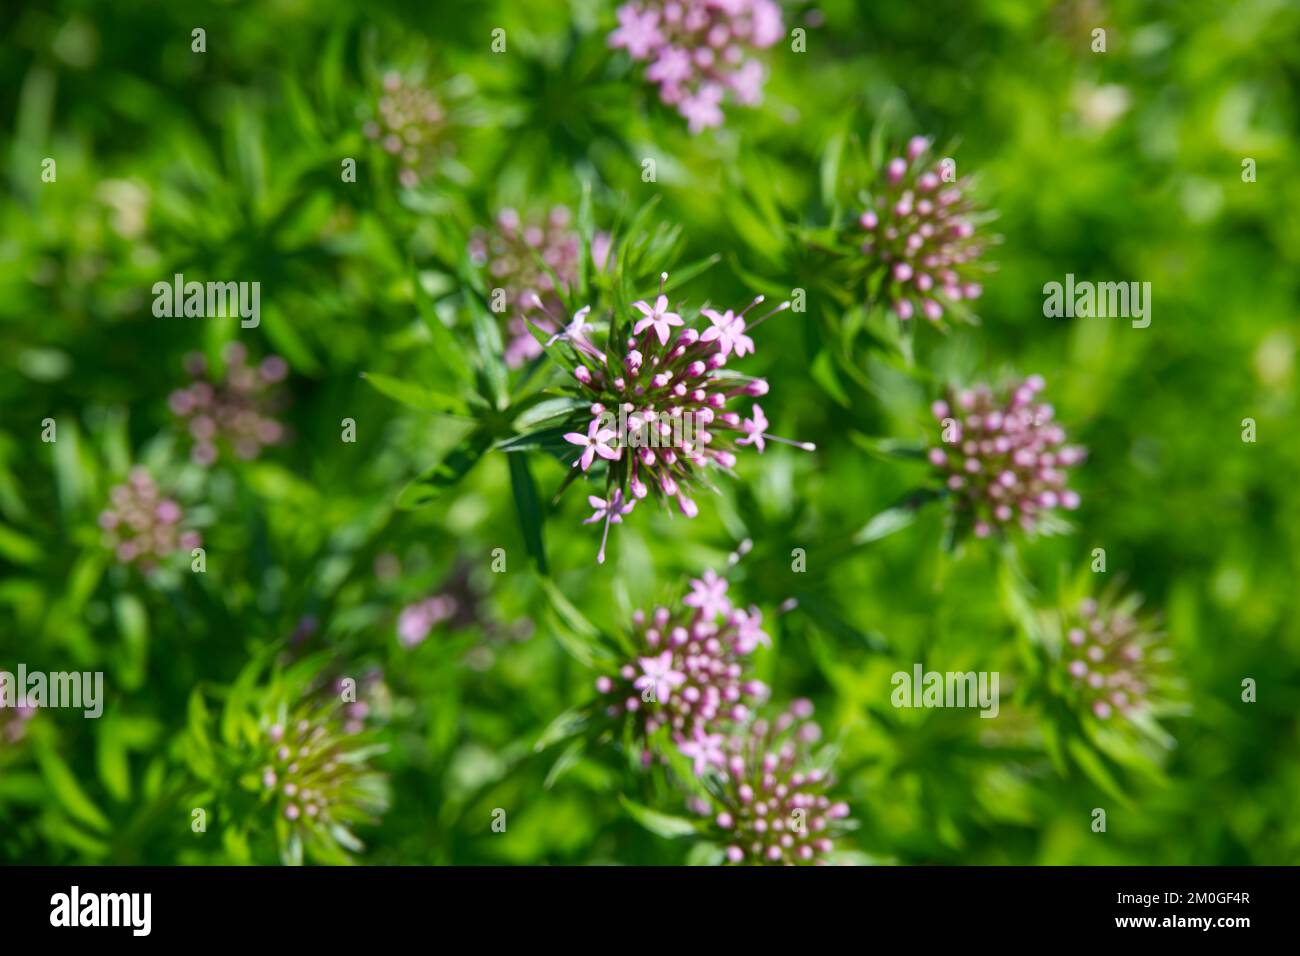 Pink summer flowers of Phuopsis stylosa / Caucasian crosswort in UK garden June Stock Photo